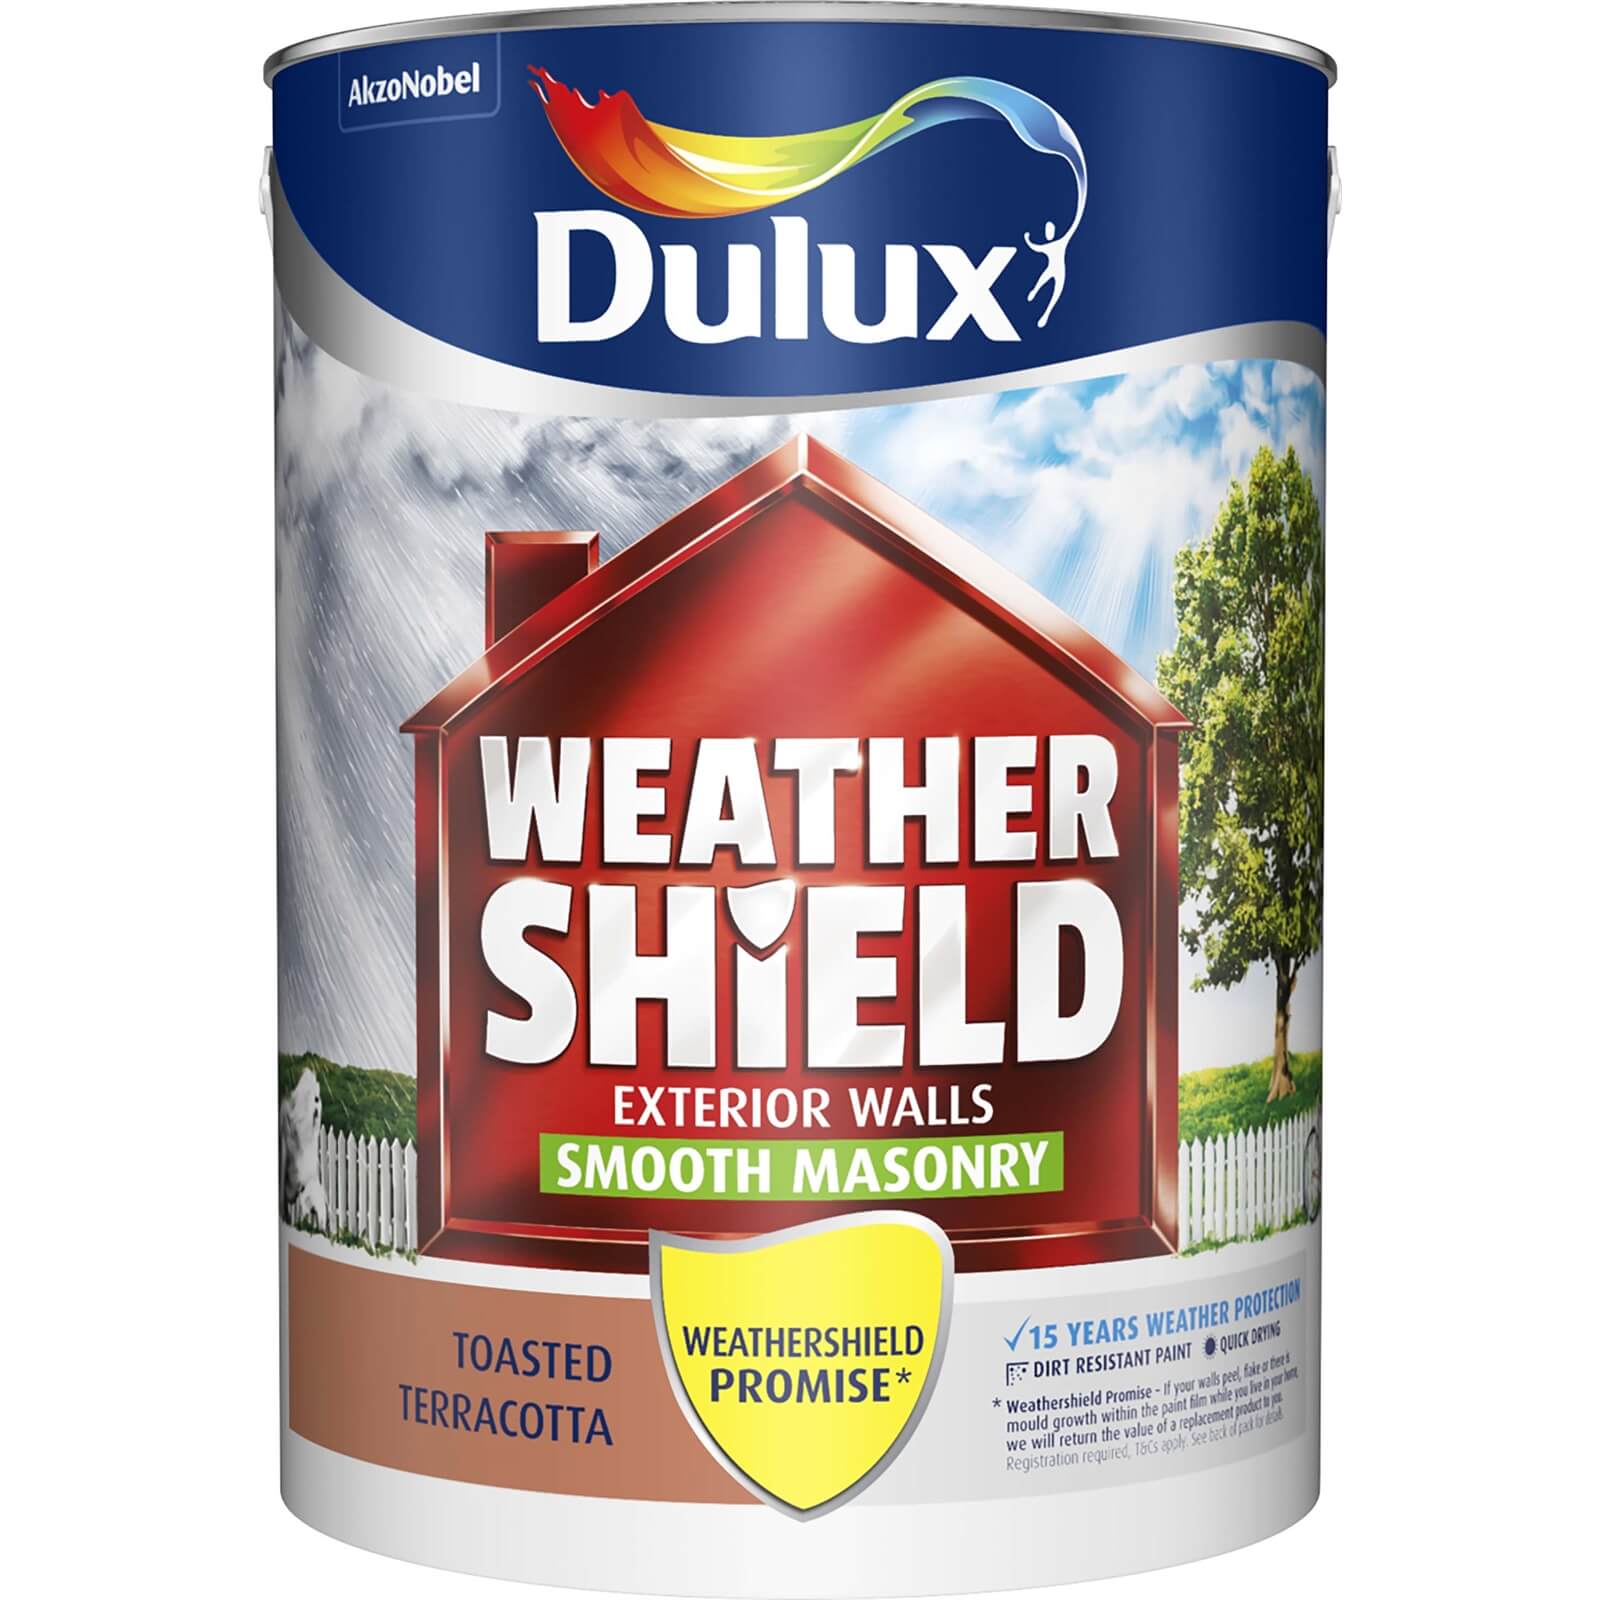 Dulux Weathershield Masonry Paint Toasted Terracotta - 5L